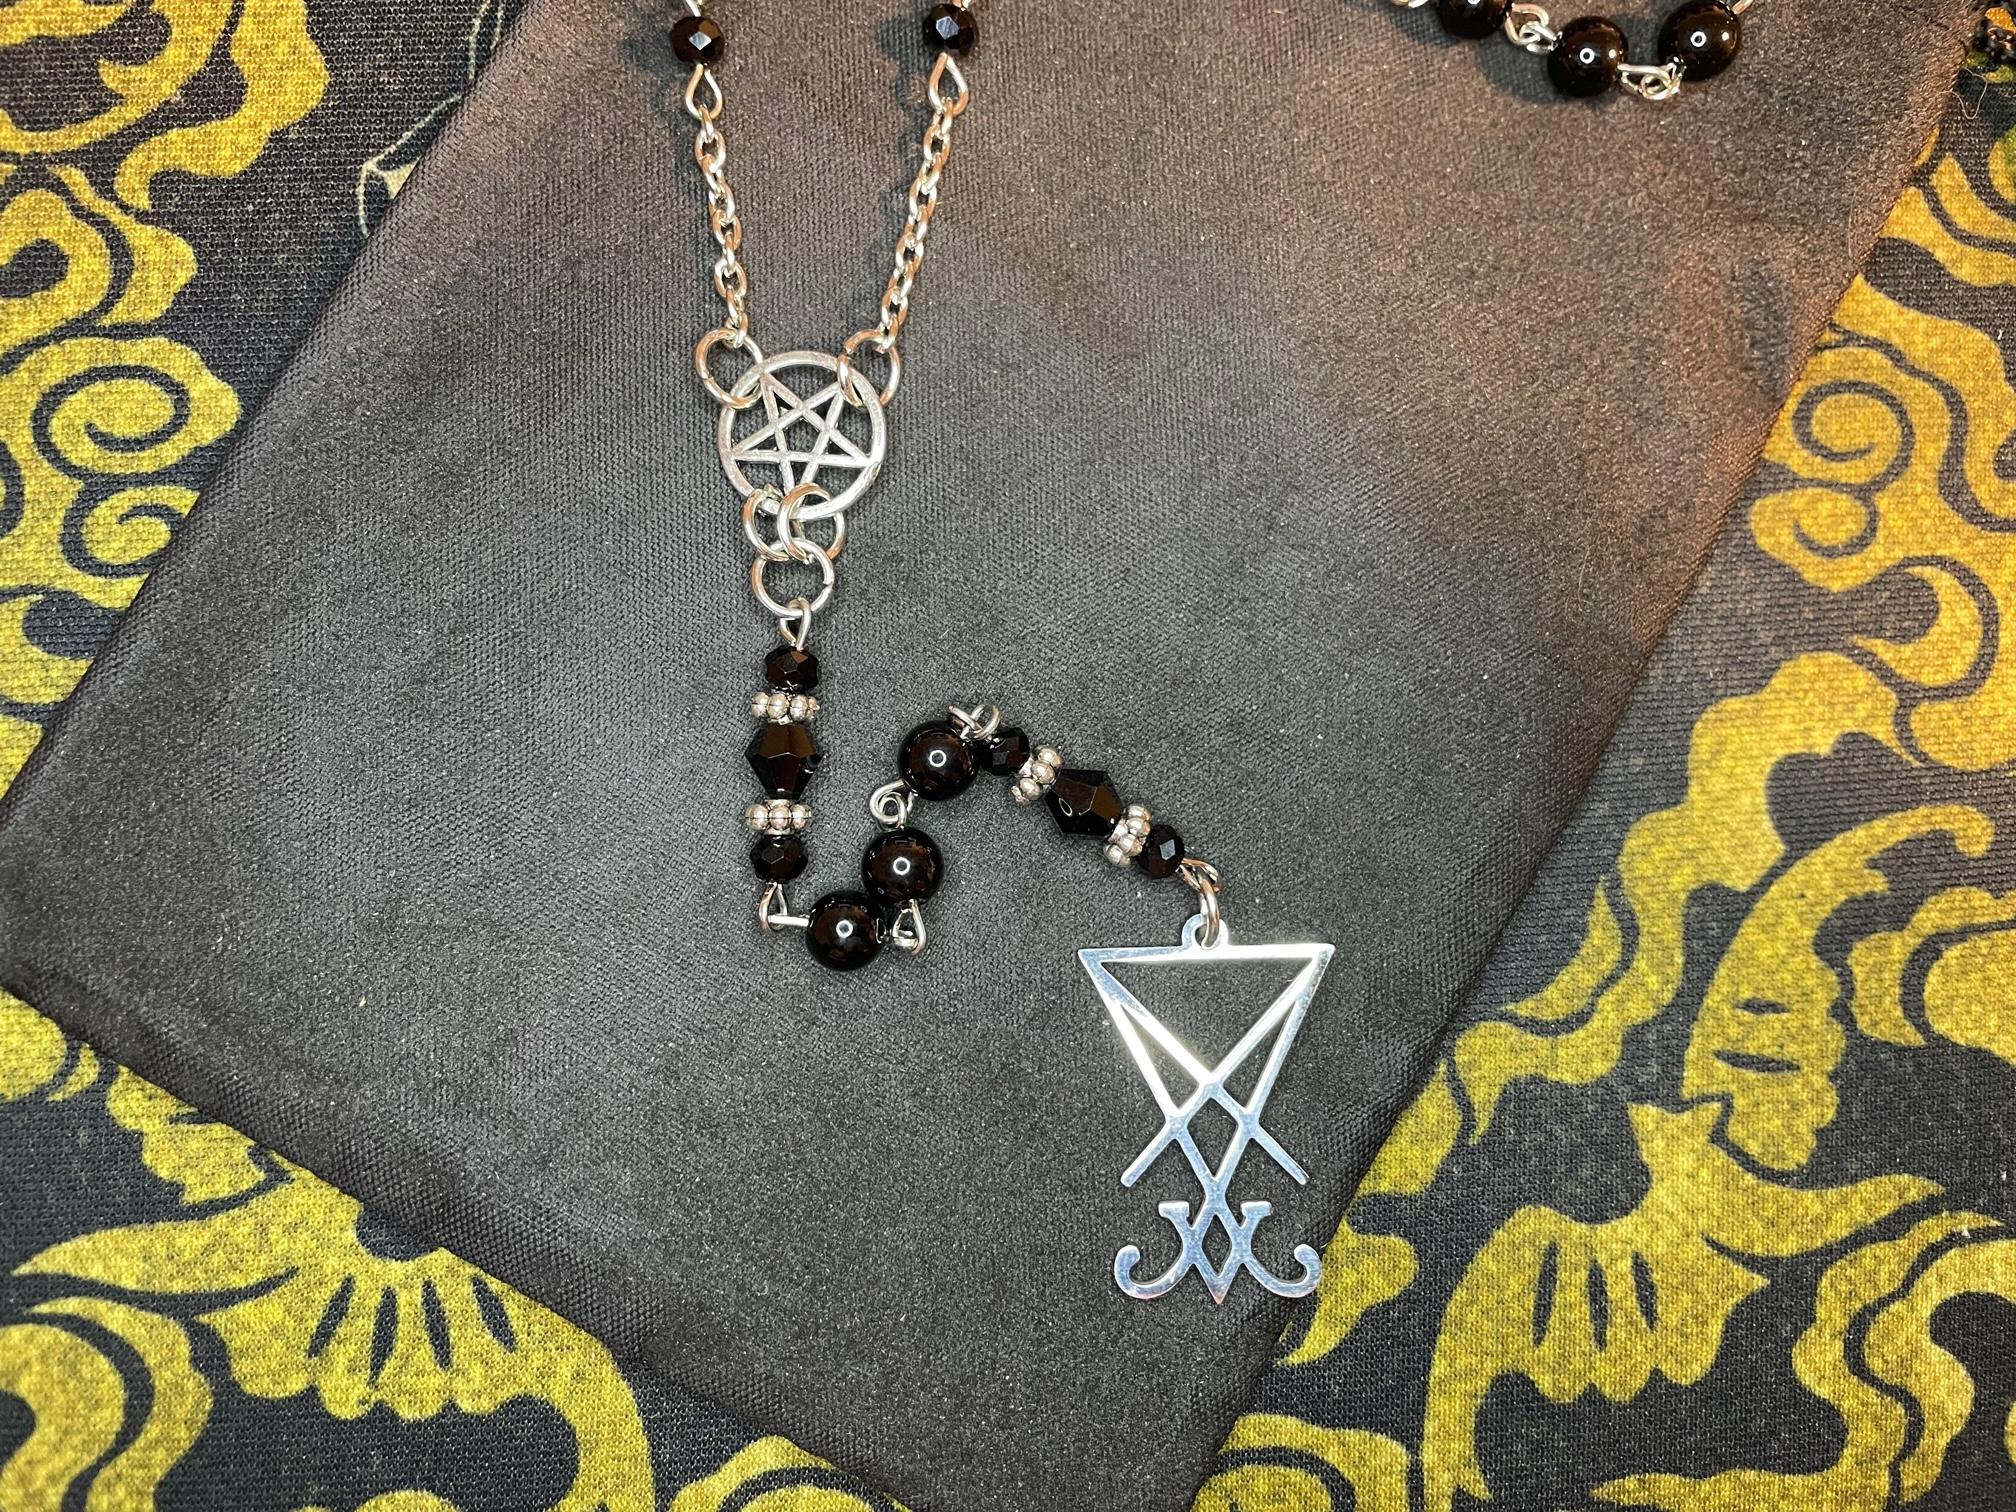 satanic rosary inverted pentagram sigil of lucifer pendant small beads necklace